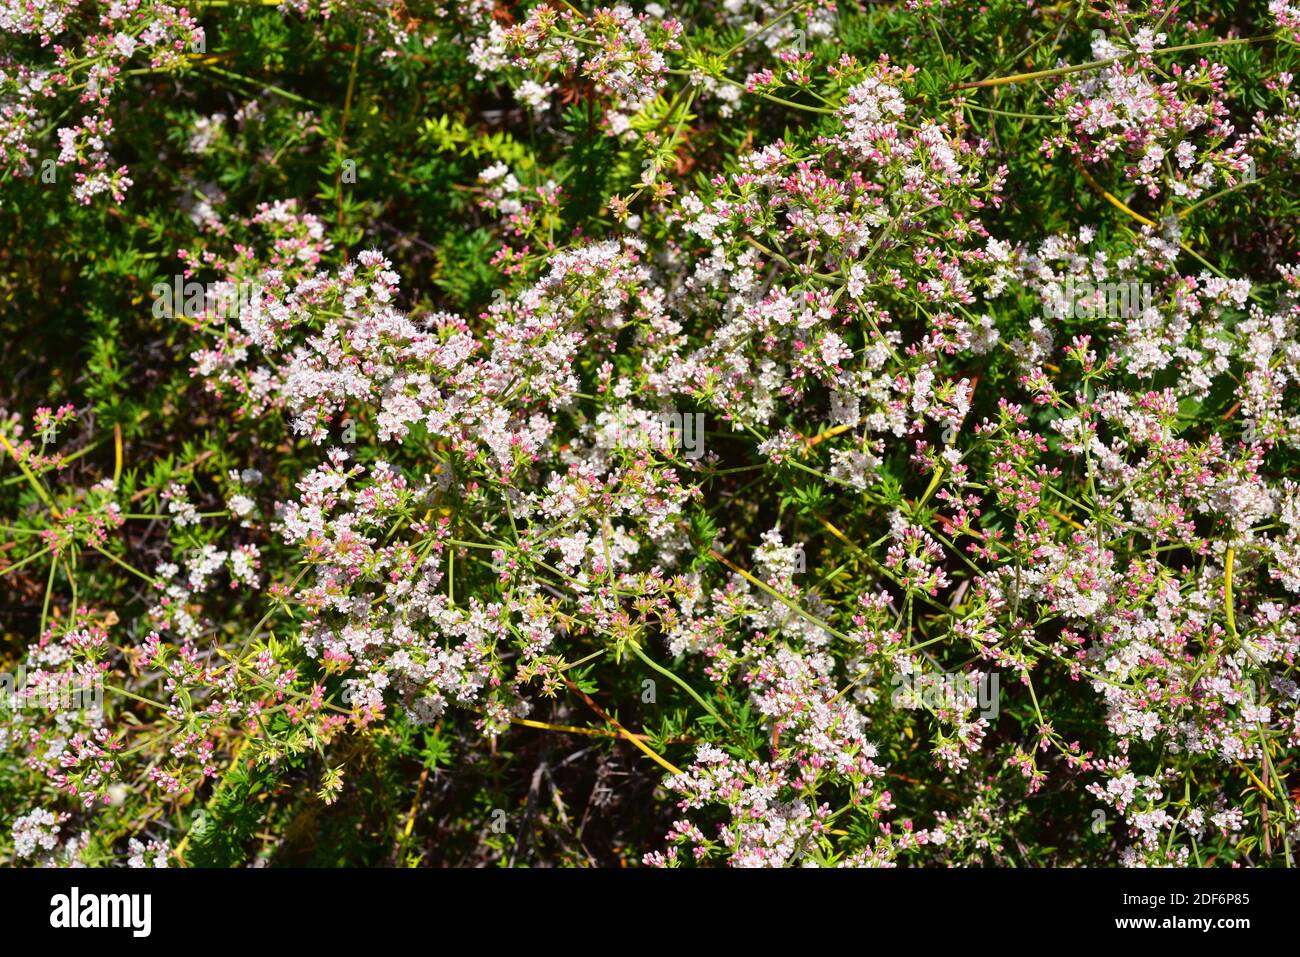 California buckwheat or Mojave buckwheat (Eriogon fasciculatum) is a shrub native to southwest USA and northwest Mexico. Stock Photo